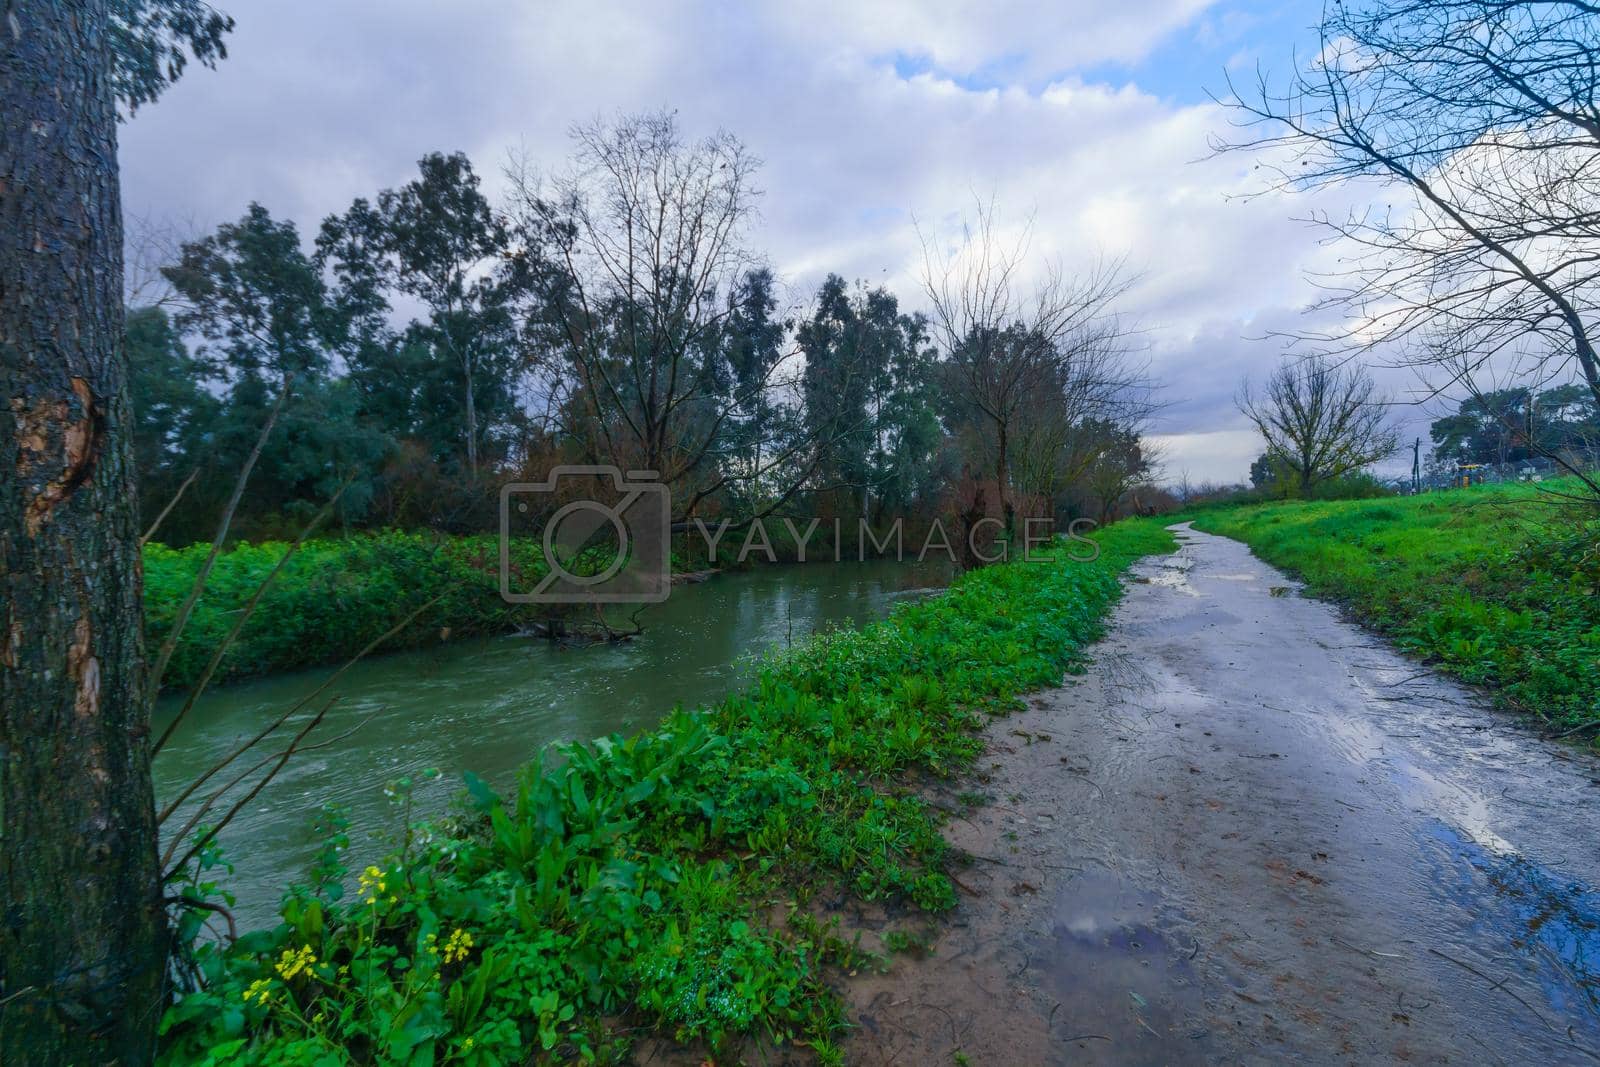 Royalty free image of Dan stream, a source of the Jordan River by RnDmS